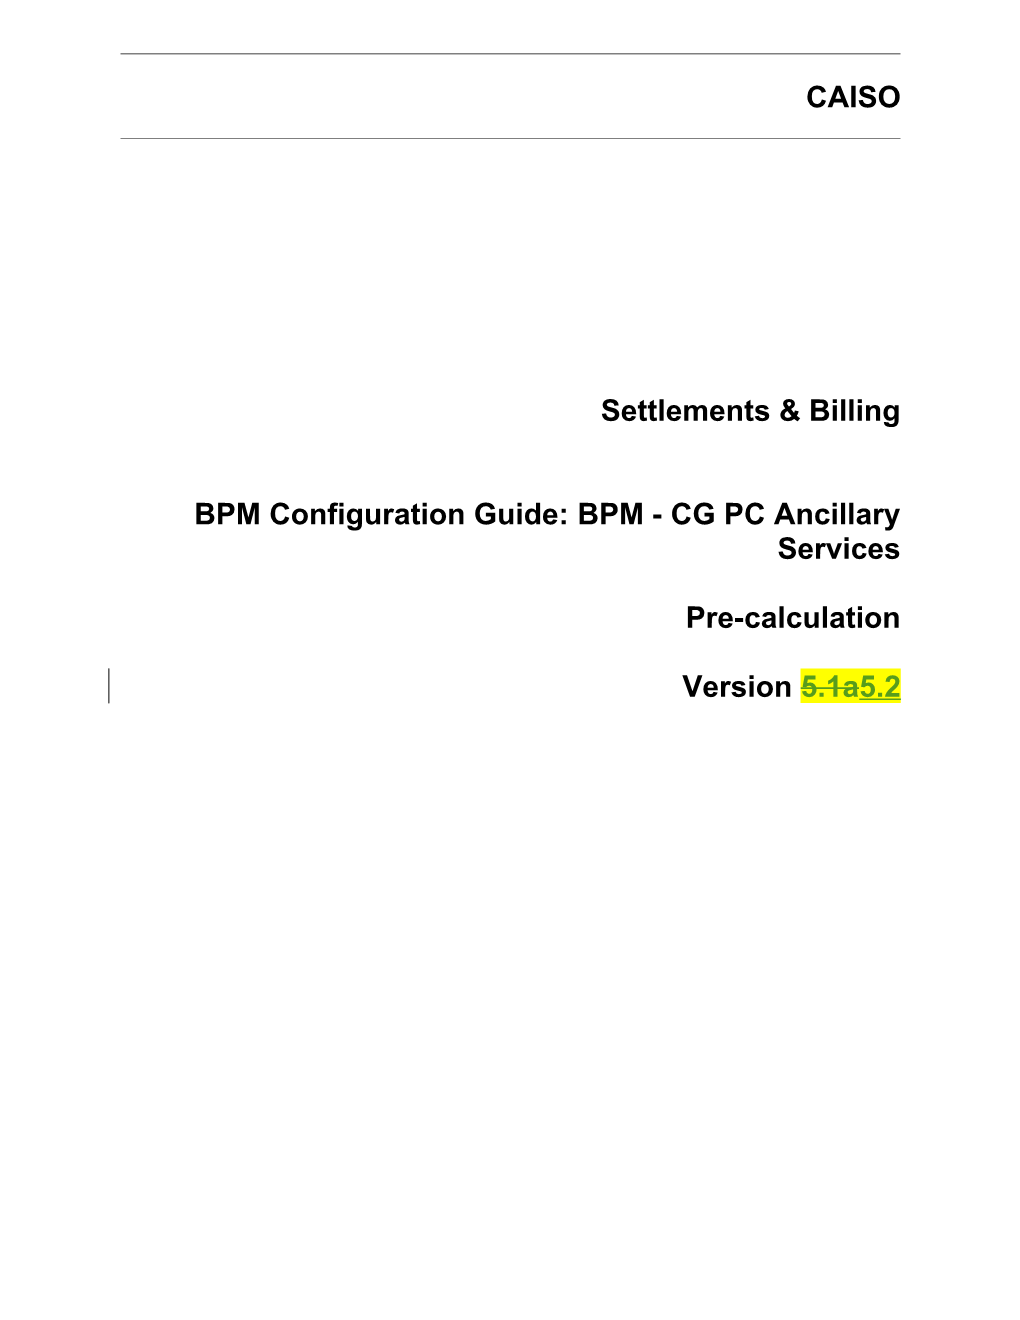 BPM - CG PC Ancillary Services